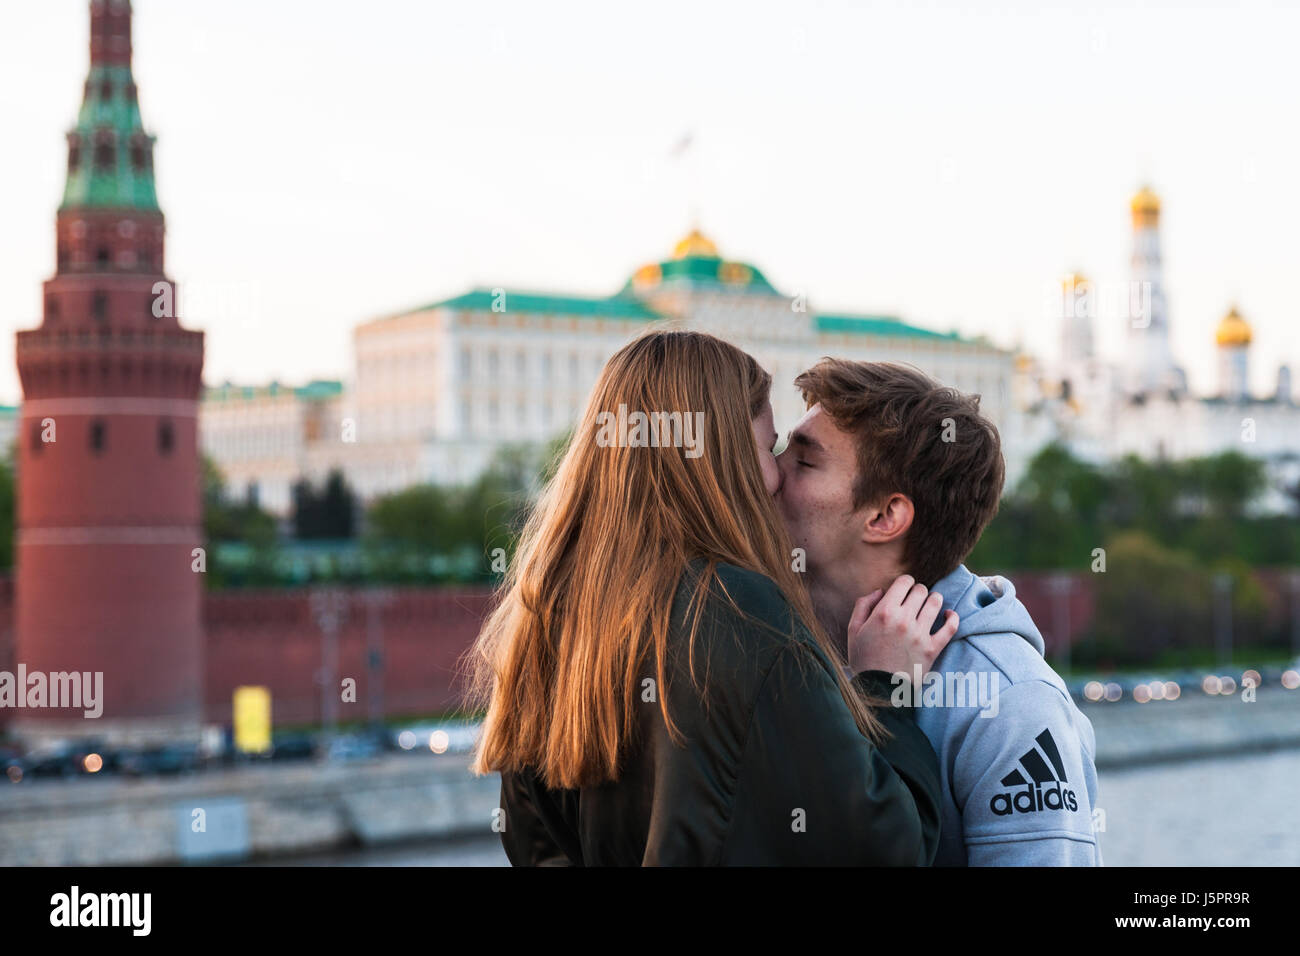 File:Kiss, Love kiss, Romance, People kissing, Rostov-on-Don, Russia.jpg -  Simple English Wikipedia, the free encyclopedia